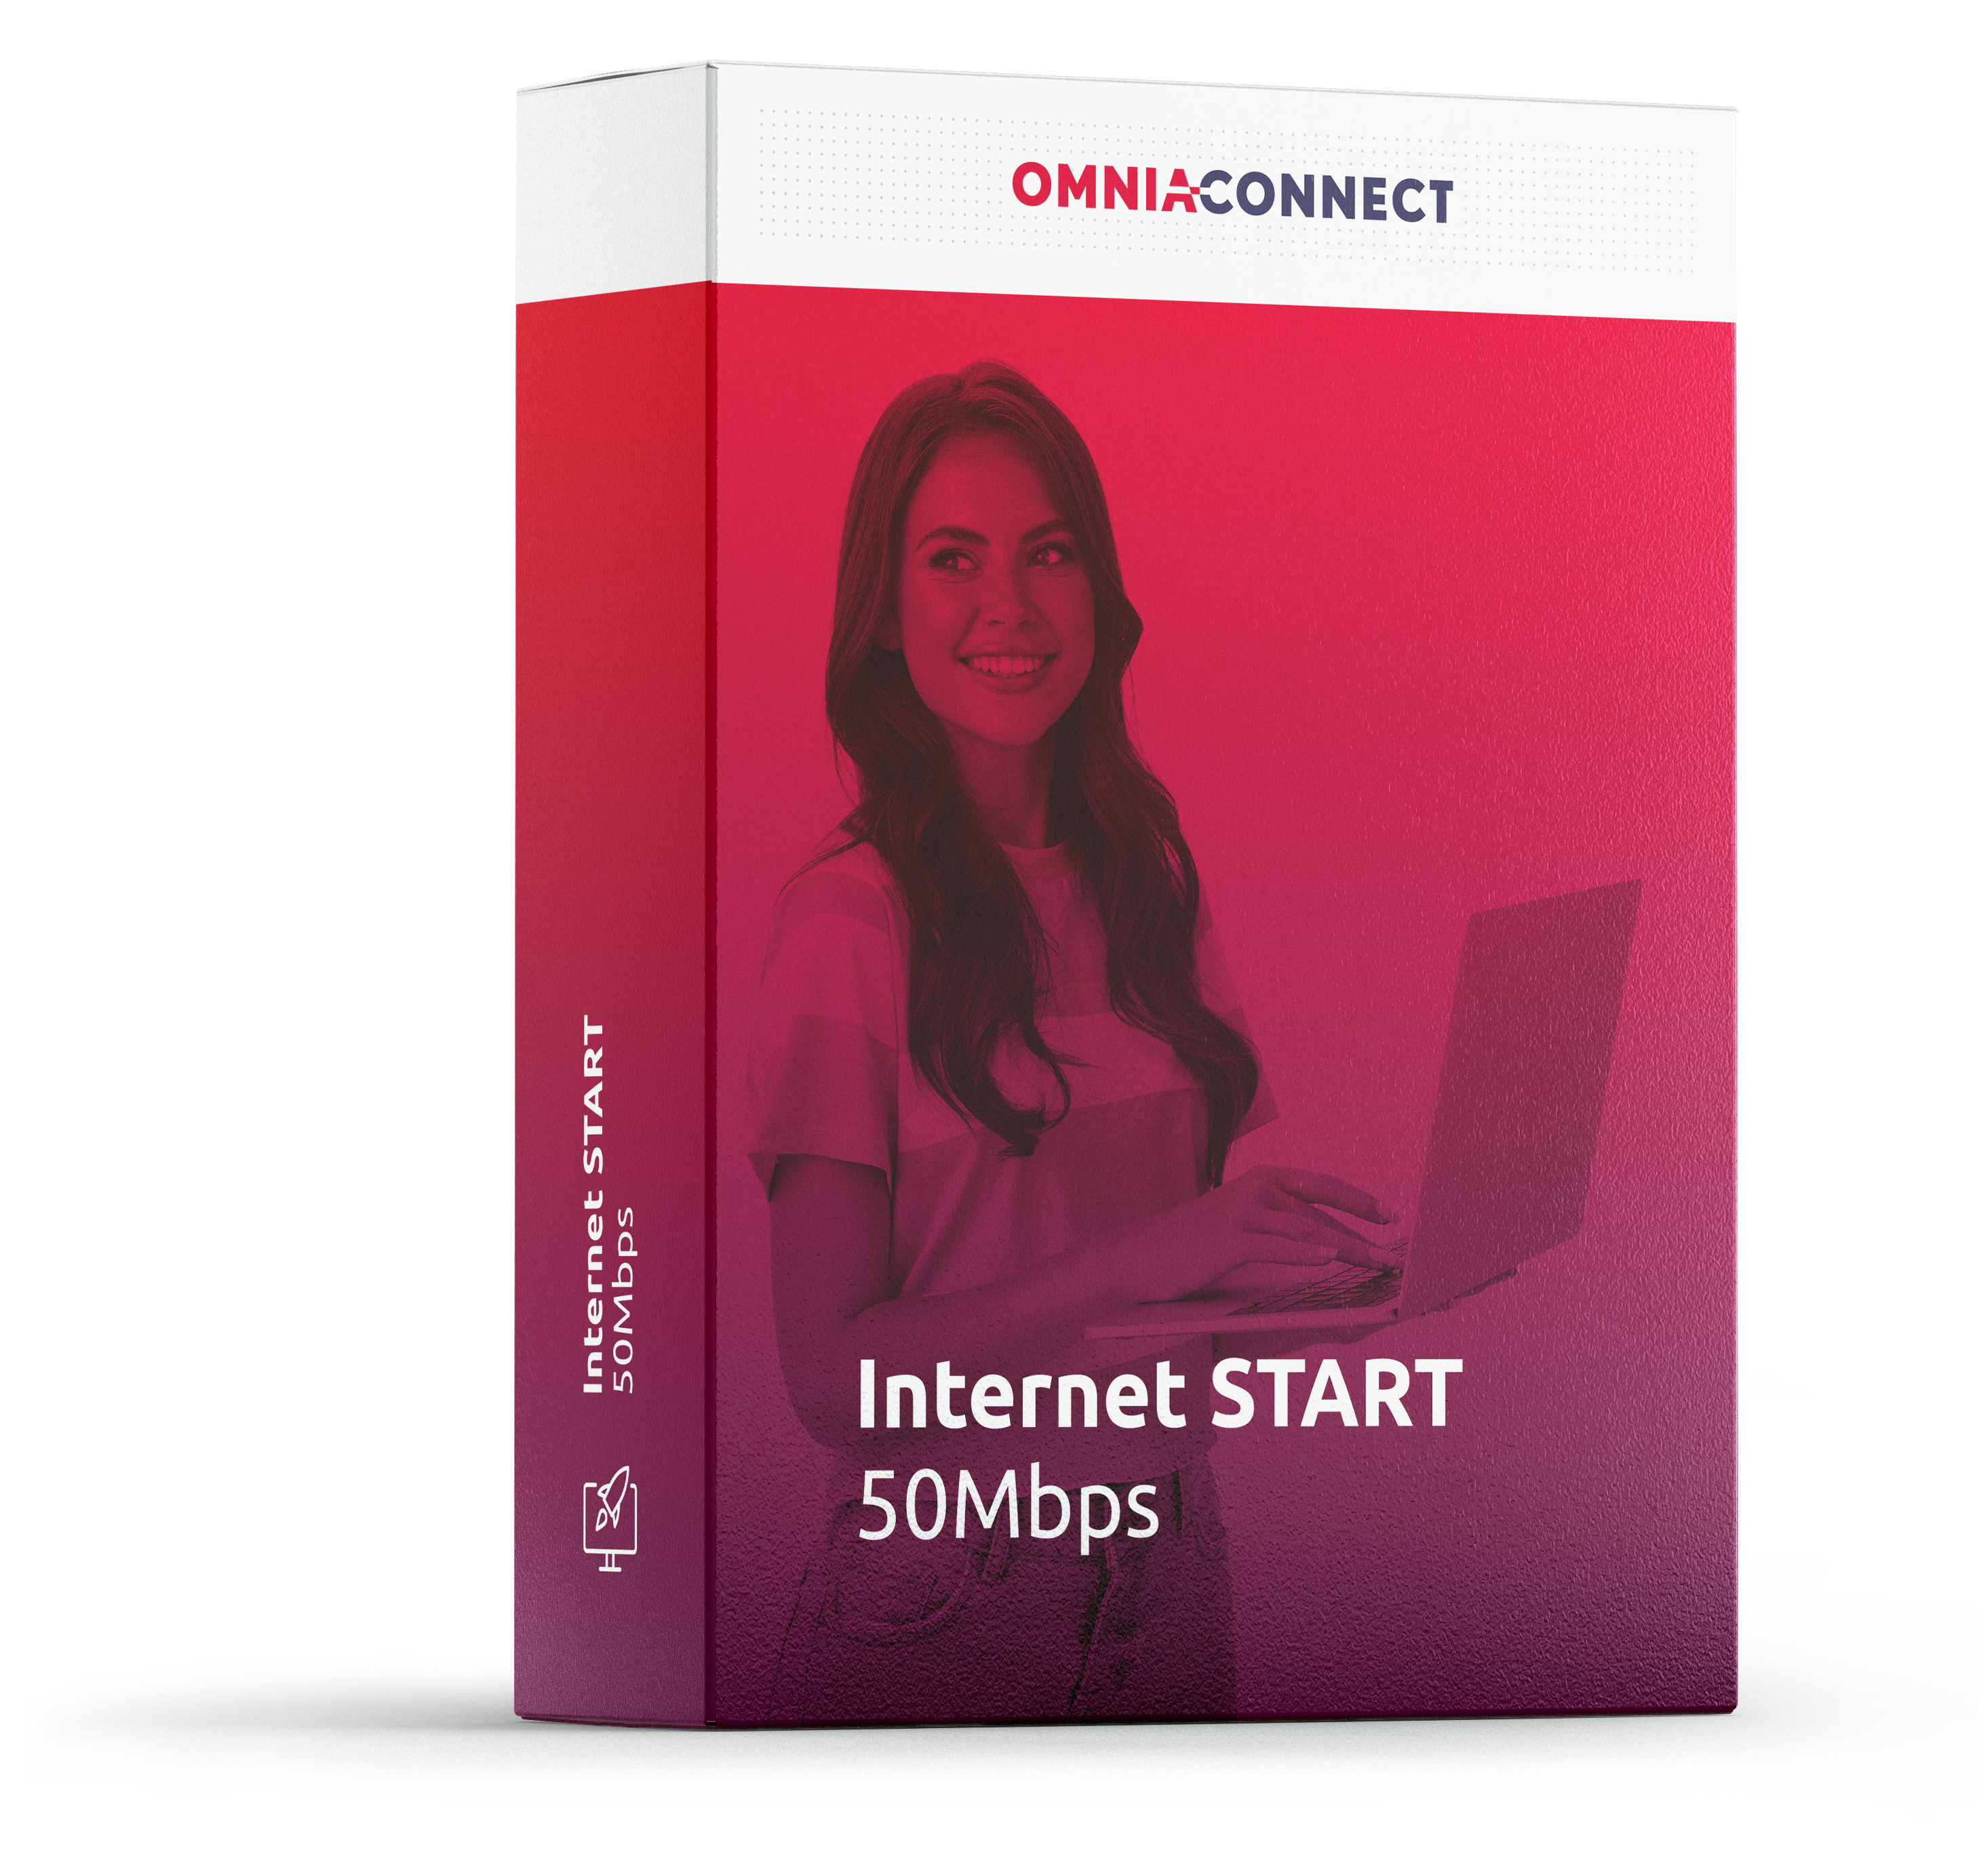 internet start pakket van omnia connect met 50 mb per seconde